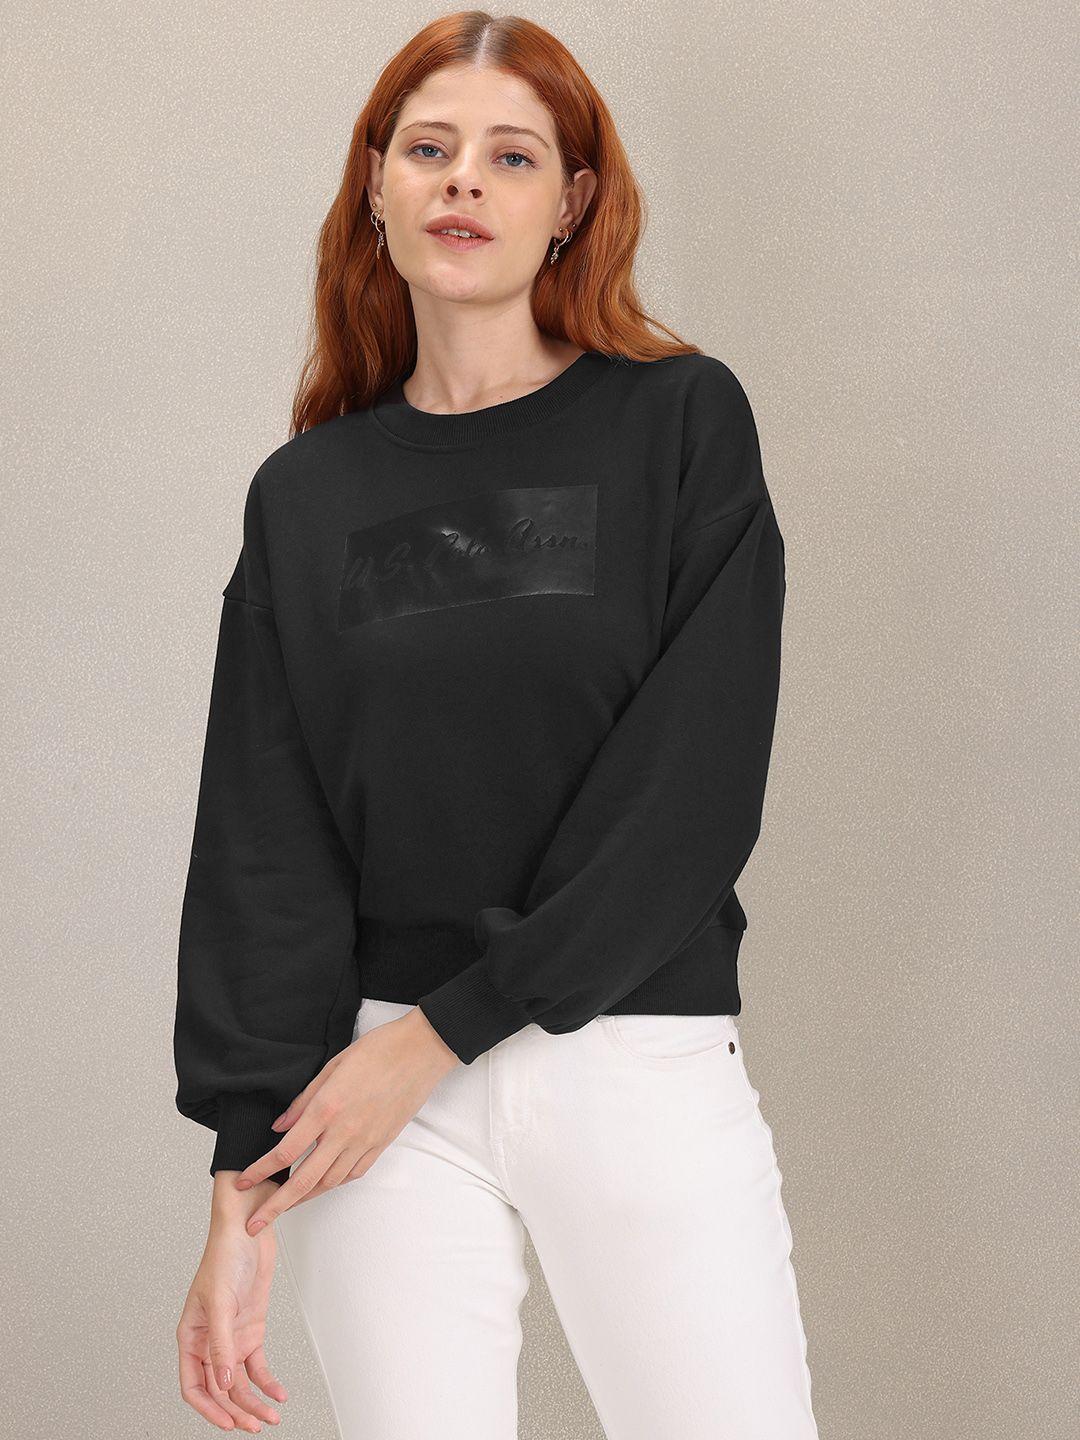 u-s-polo-assn-women-women-black-brand-logo-print-sweatshirt